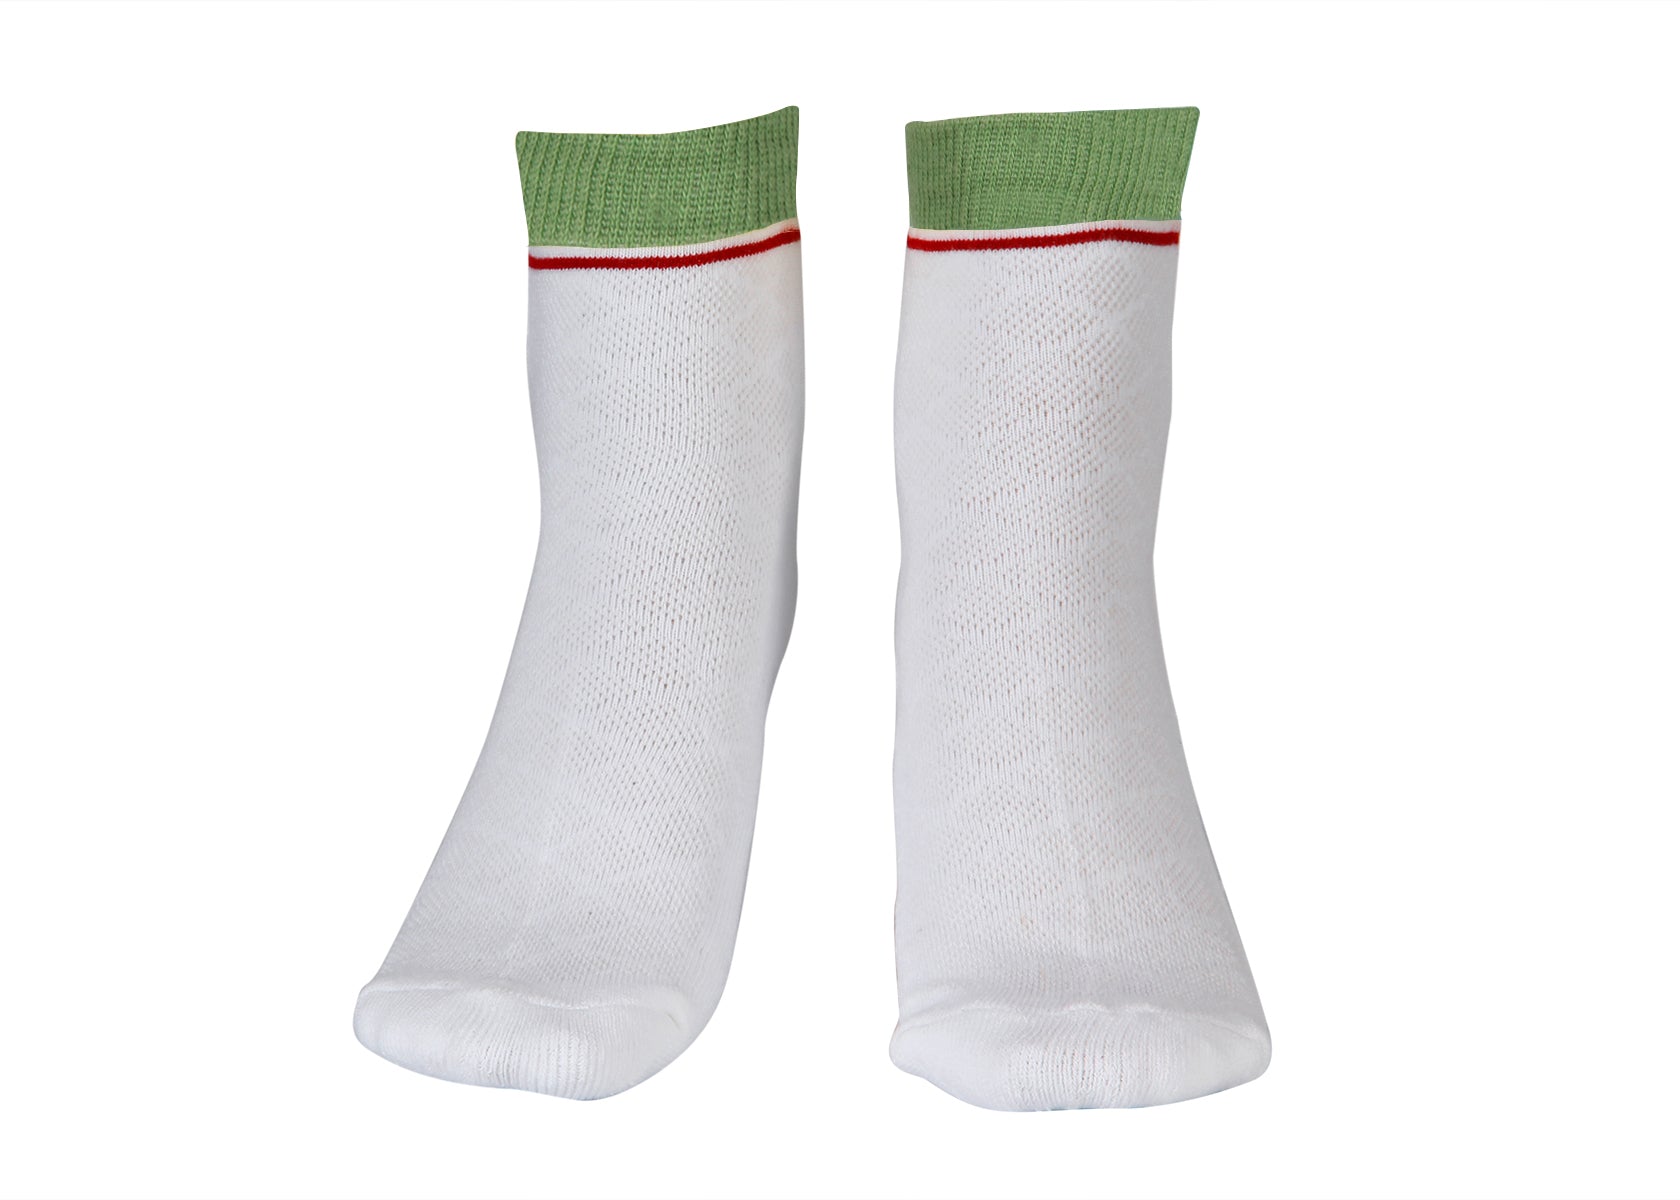 Diti Women's Ankle Length Multicolor Cotton Socks